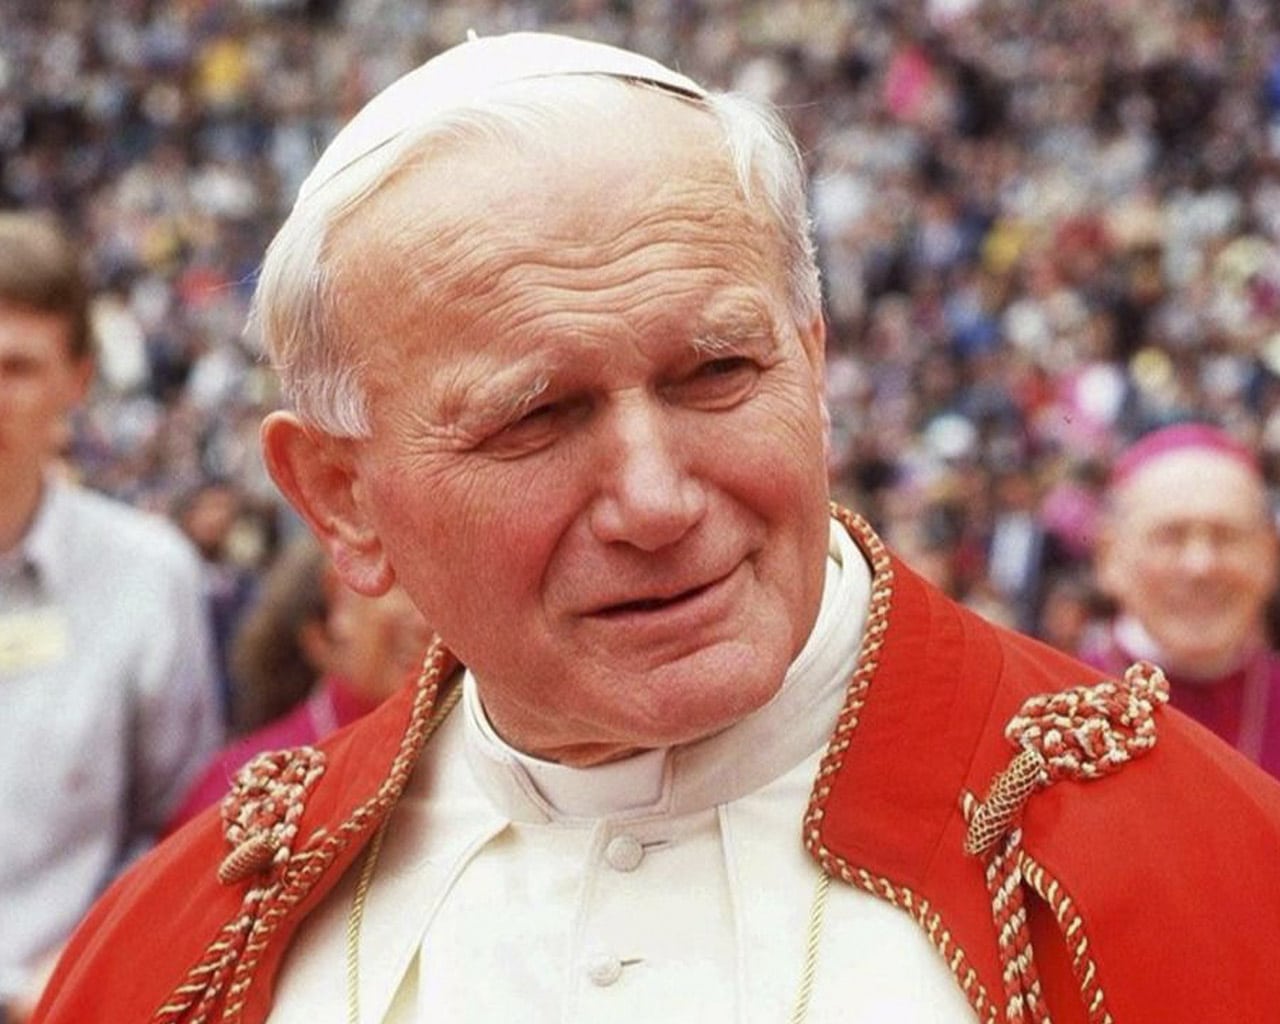 Roban reliquias de sangre de San Juan Pablo II